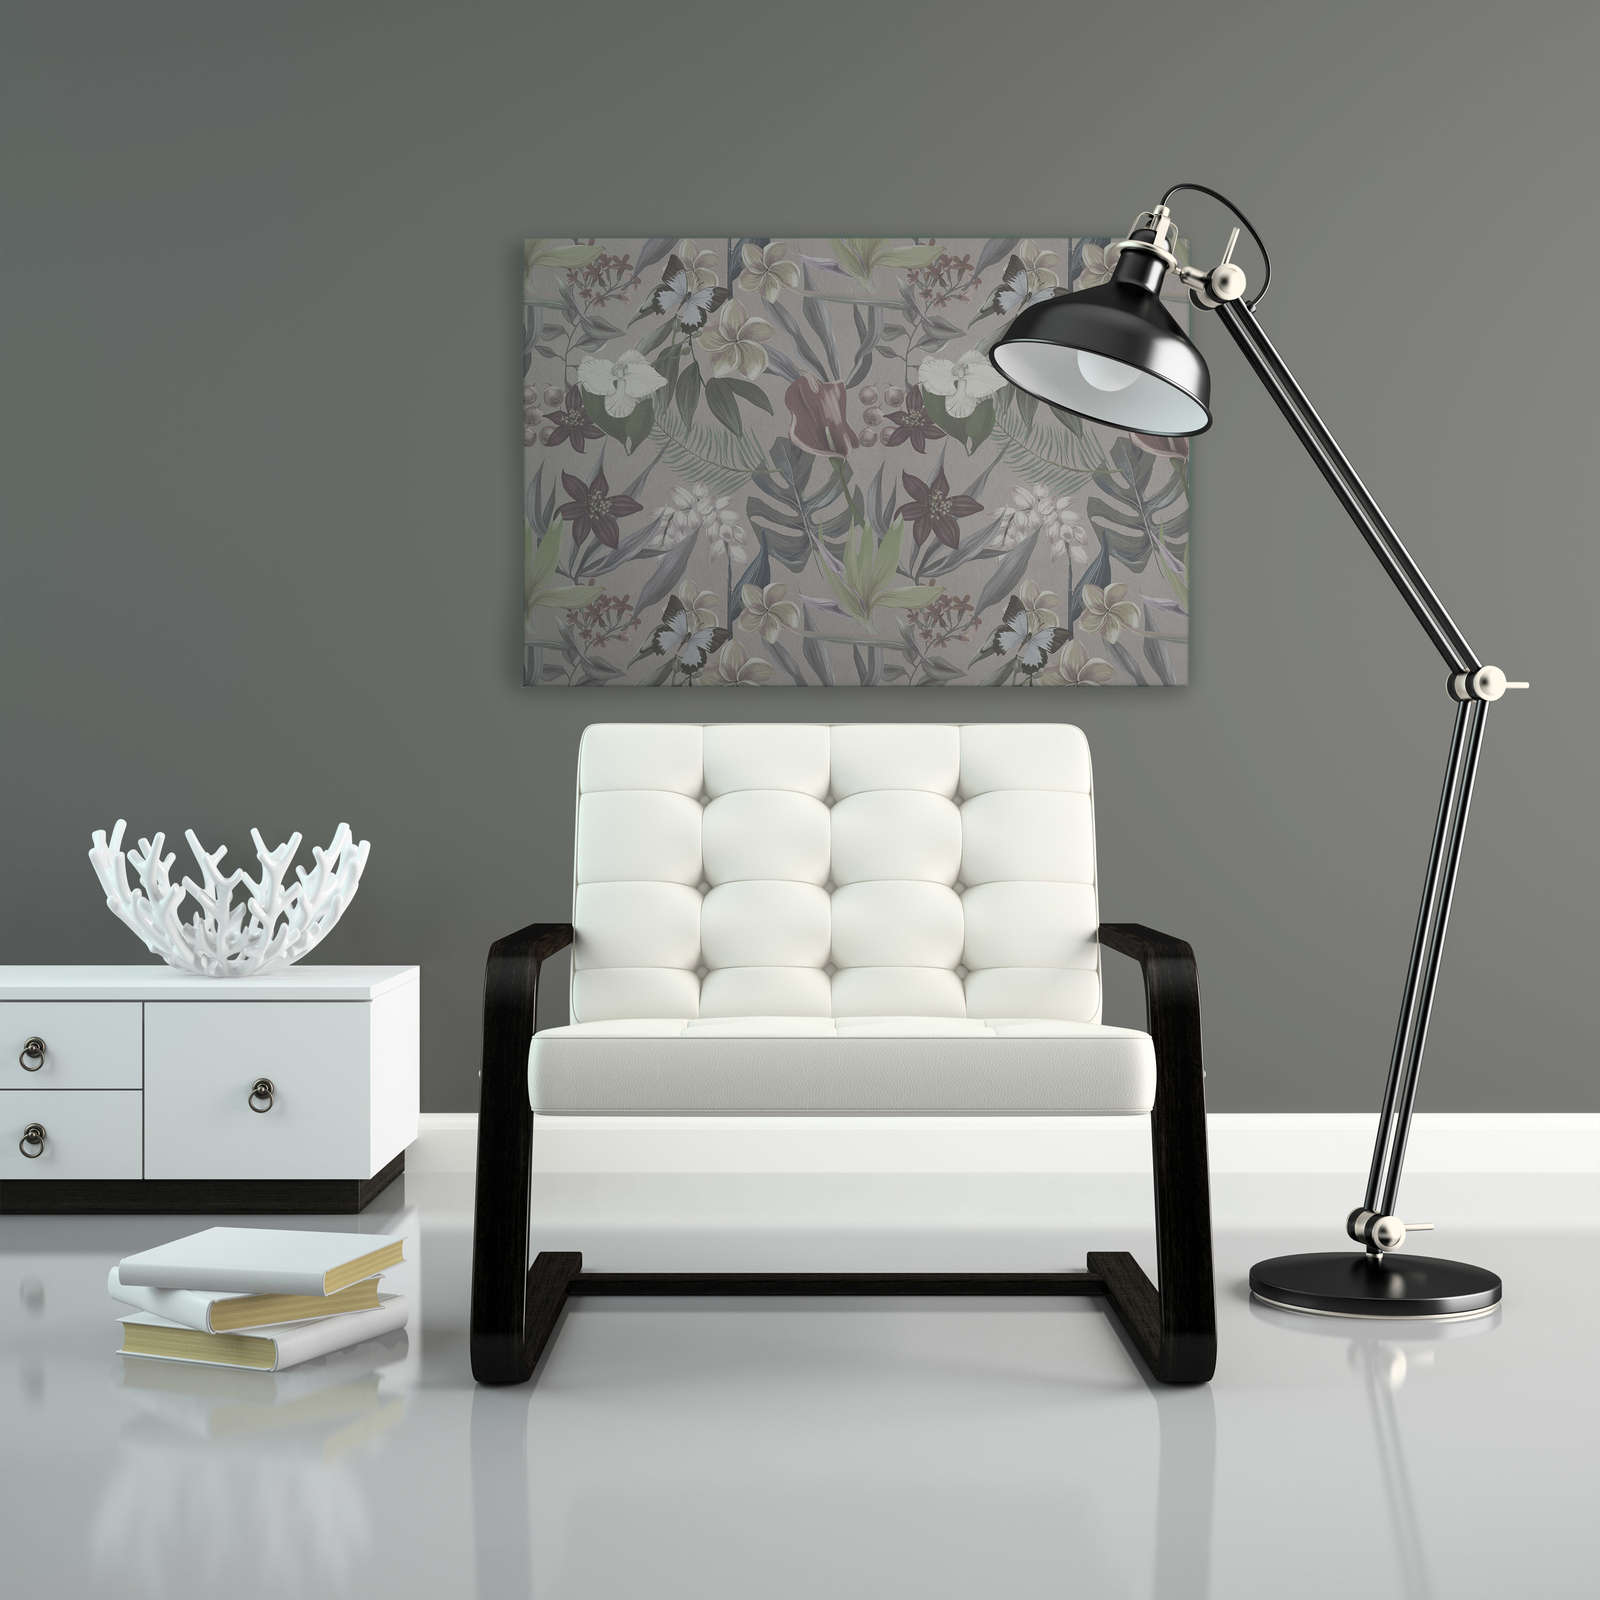             Lienzo Jungla Floral Pintura dibujada | gris, blanco - 0,90 m x 0,60 m
        